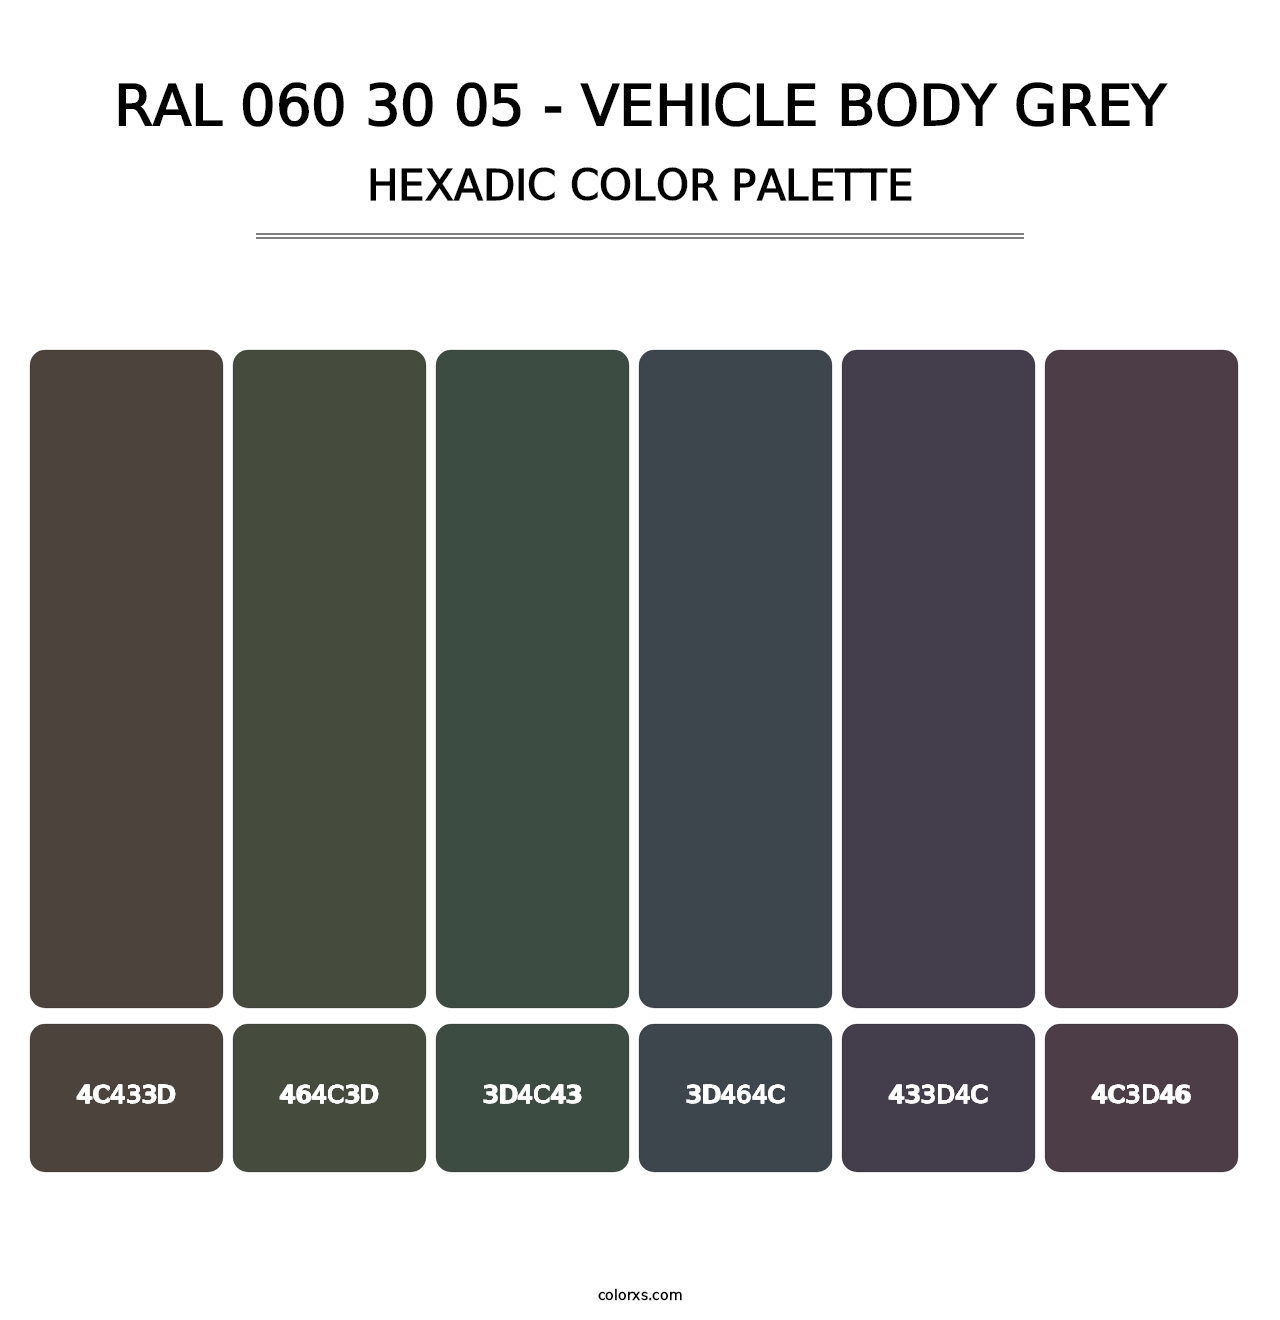 RAL 060 30 05 - Vehicle Body Grey - Hexadic Color Palette